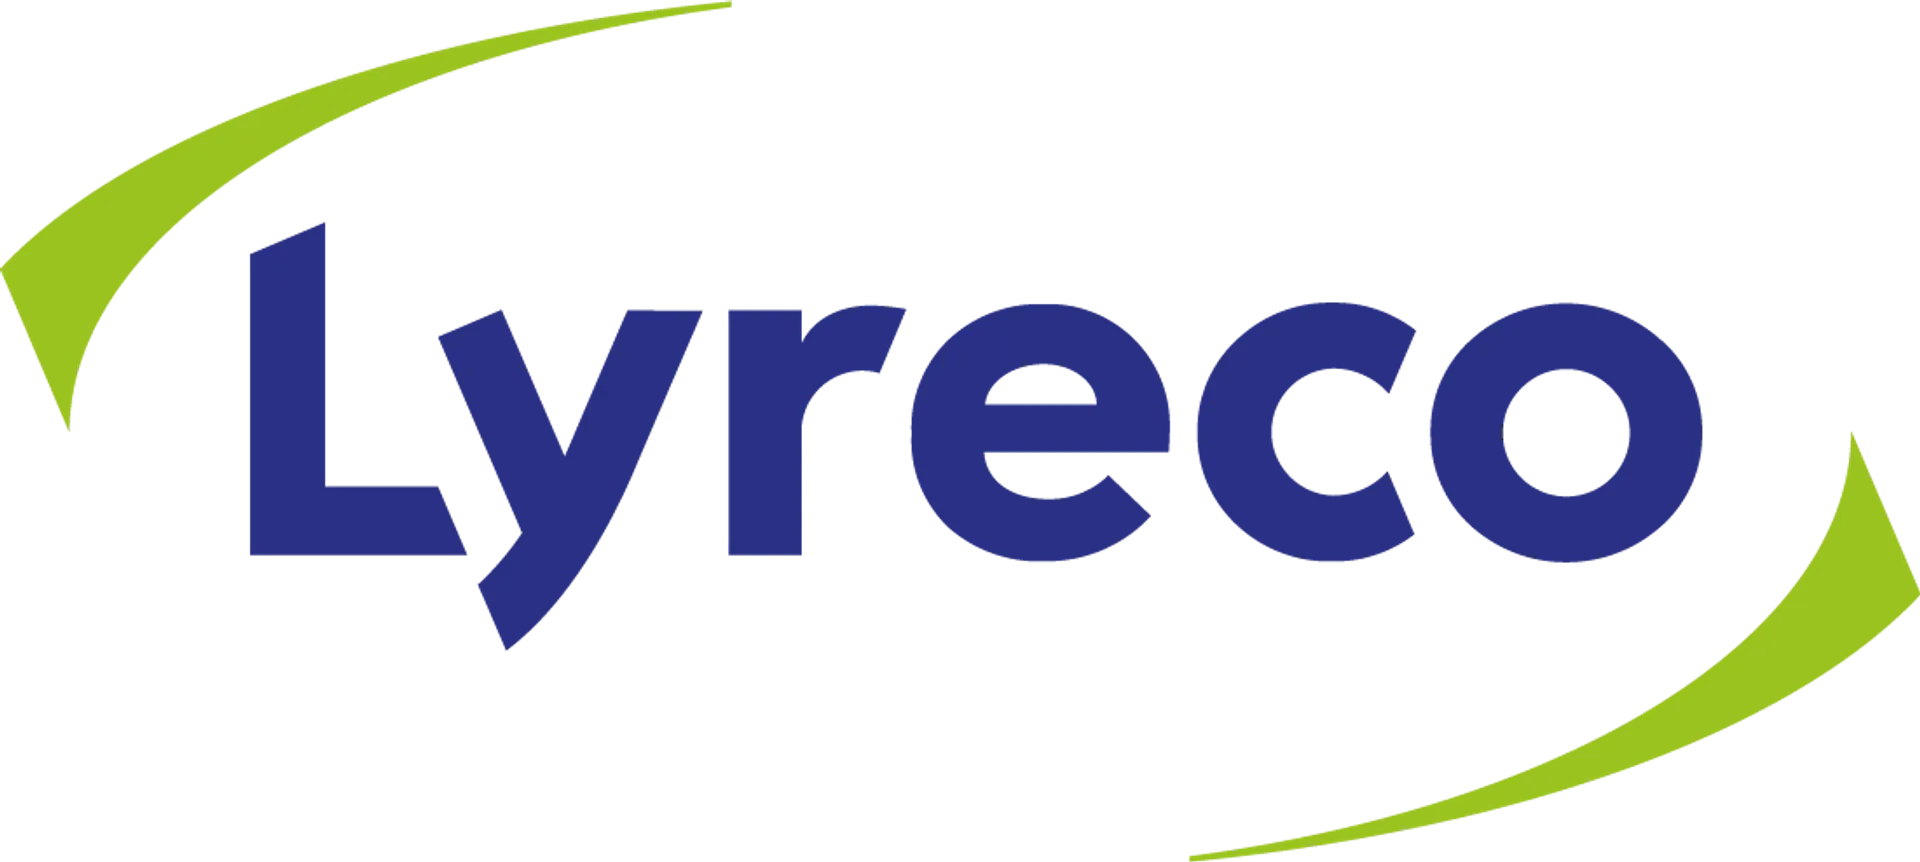 LYRECO logo of current catalogue